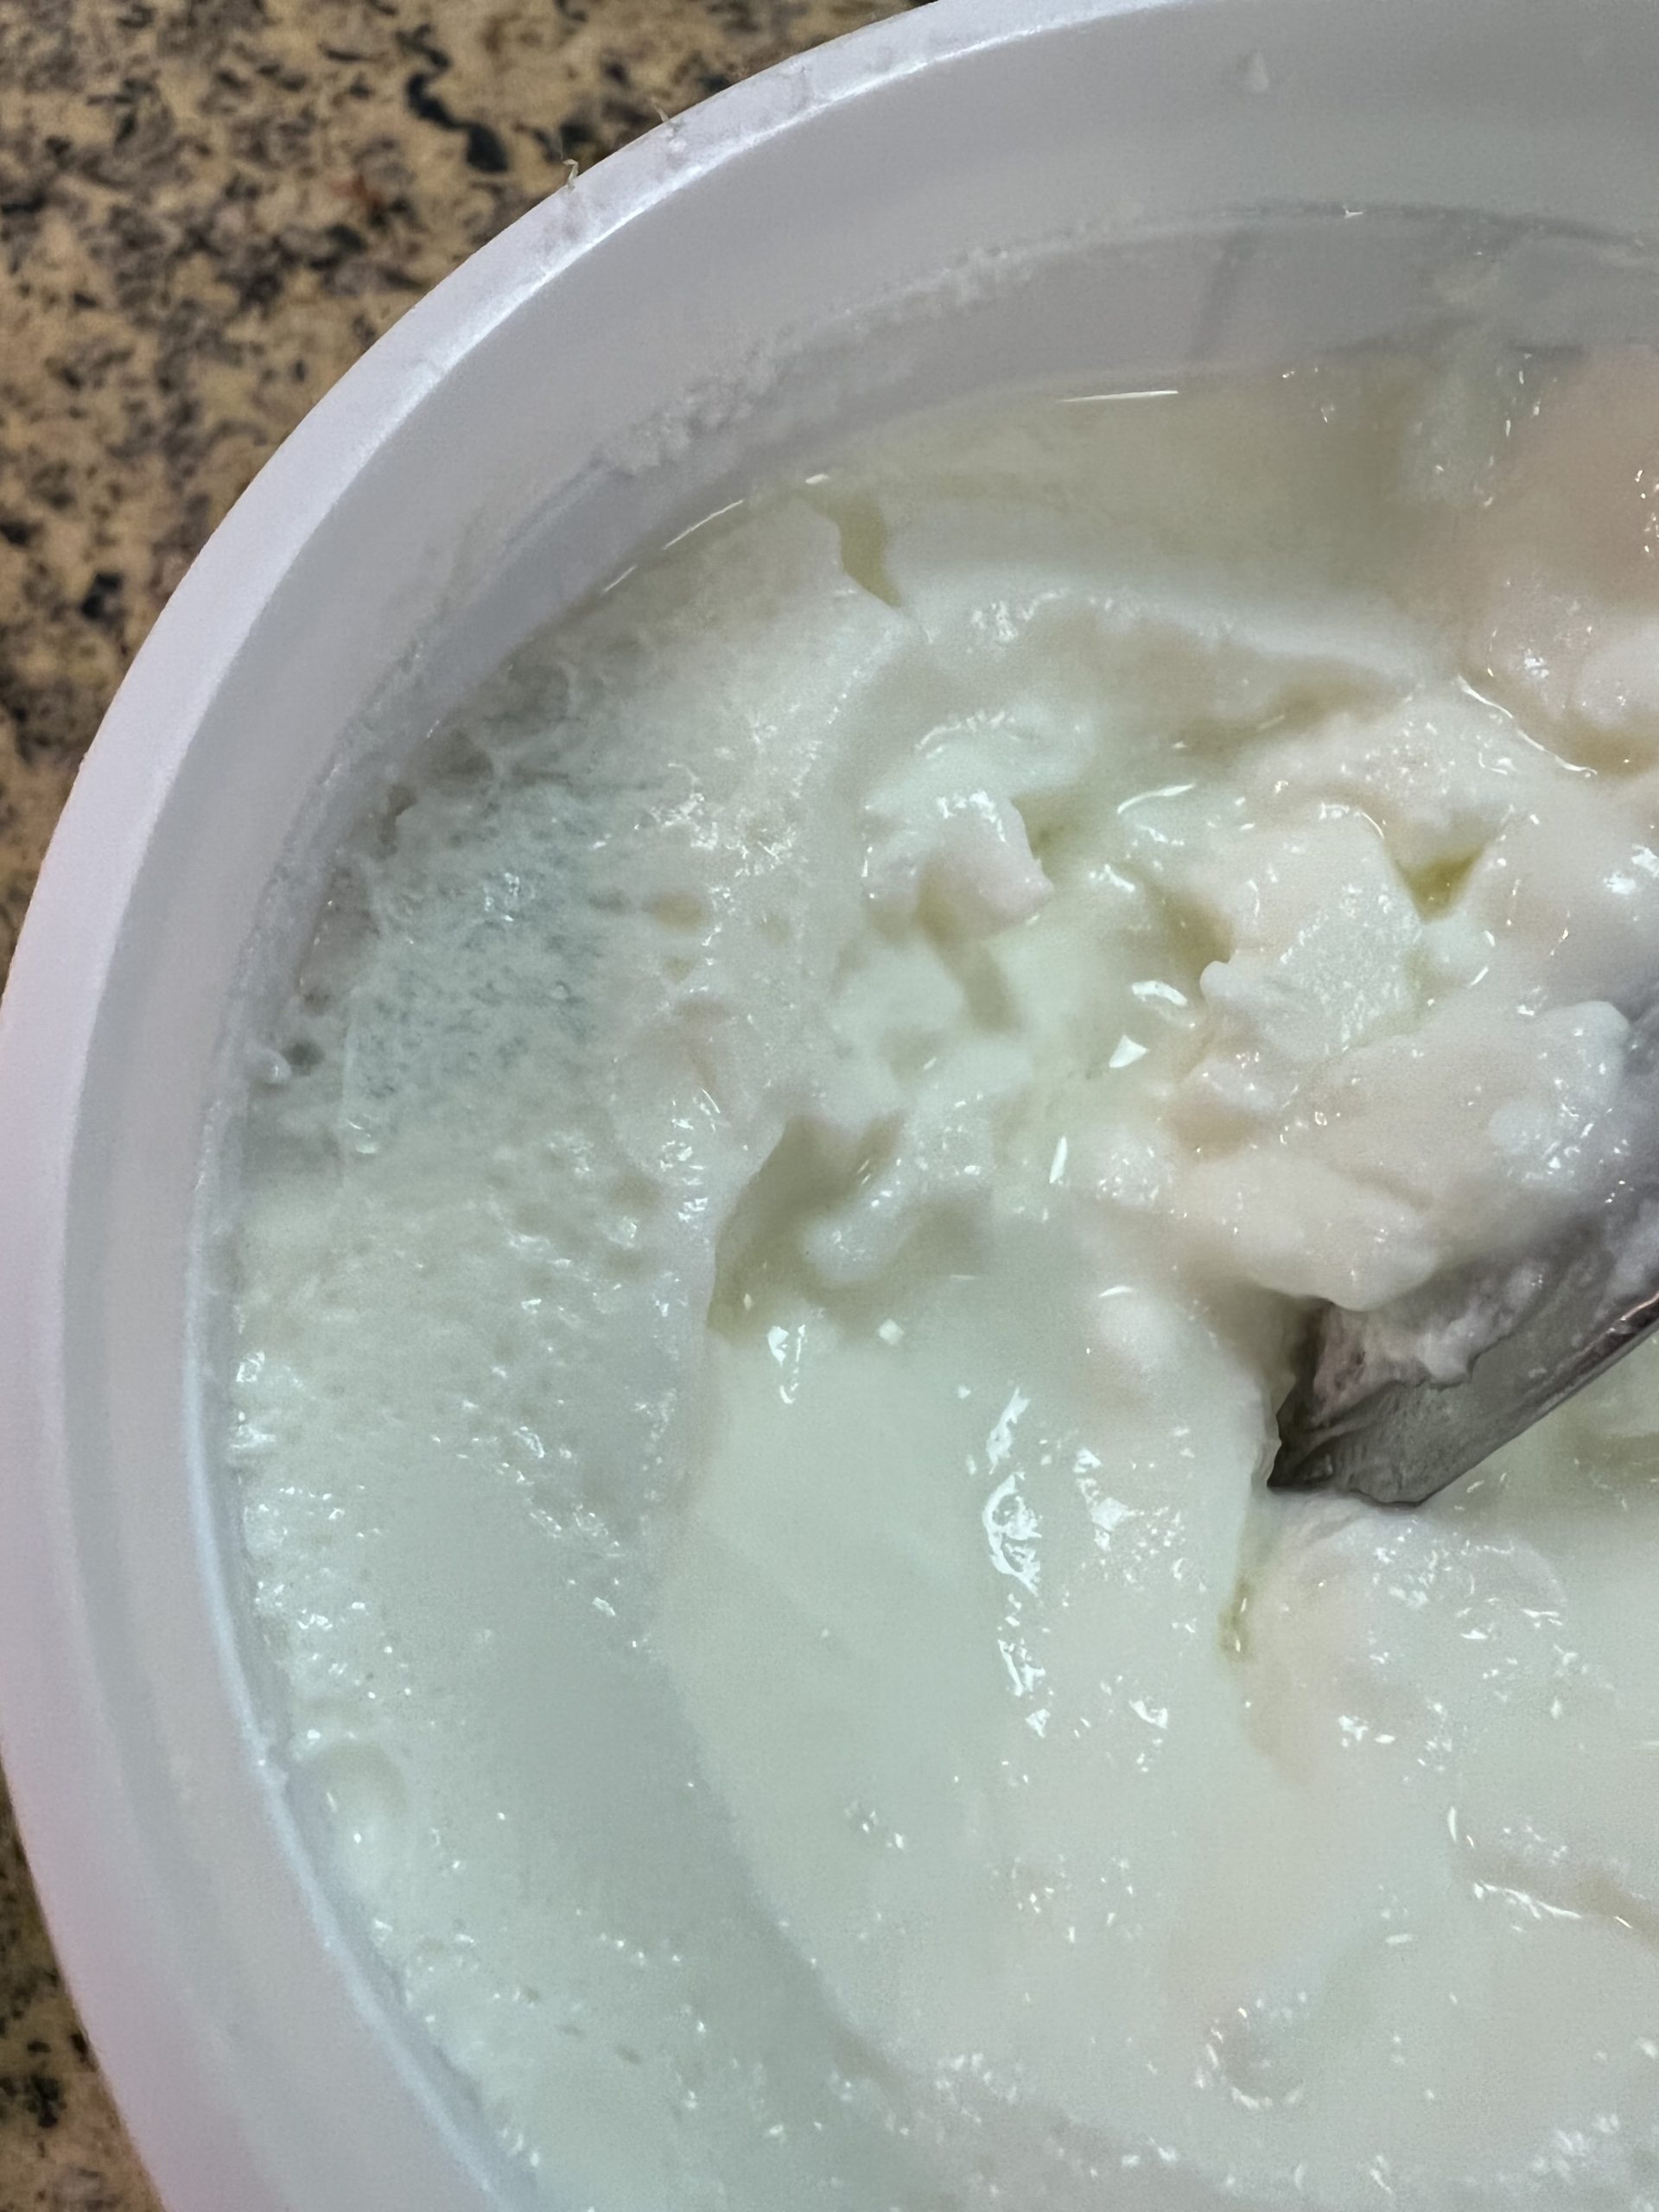 Can yogurt grow mold?